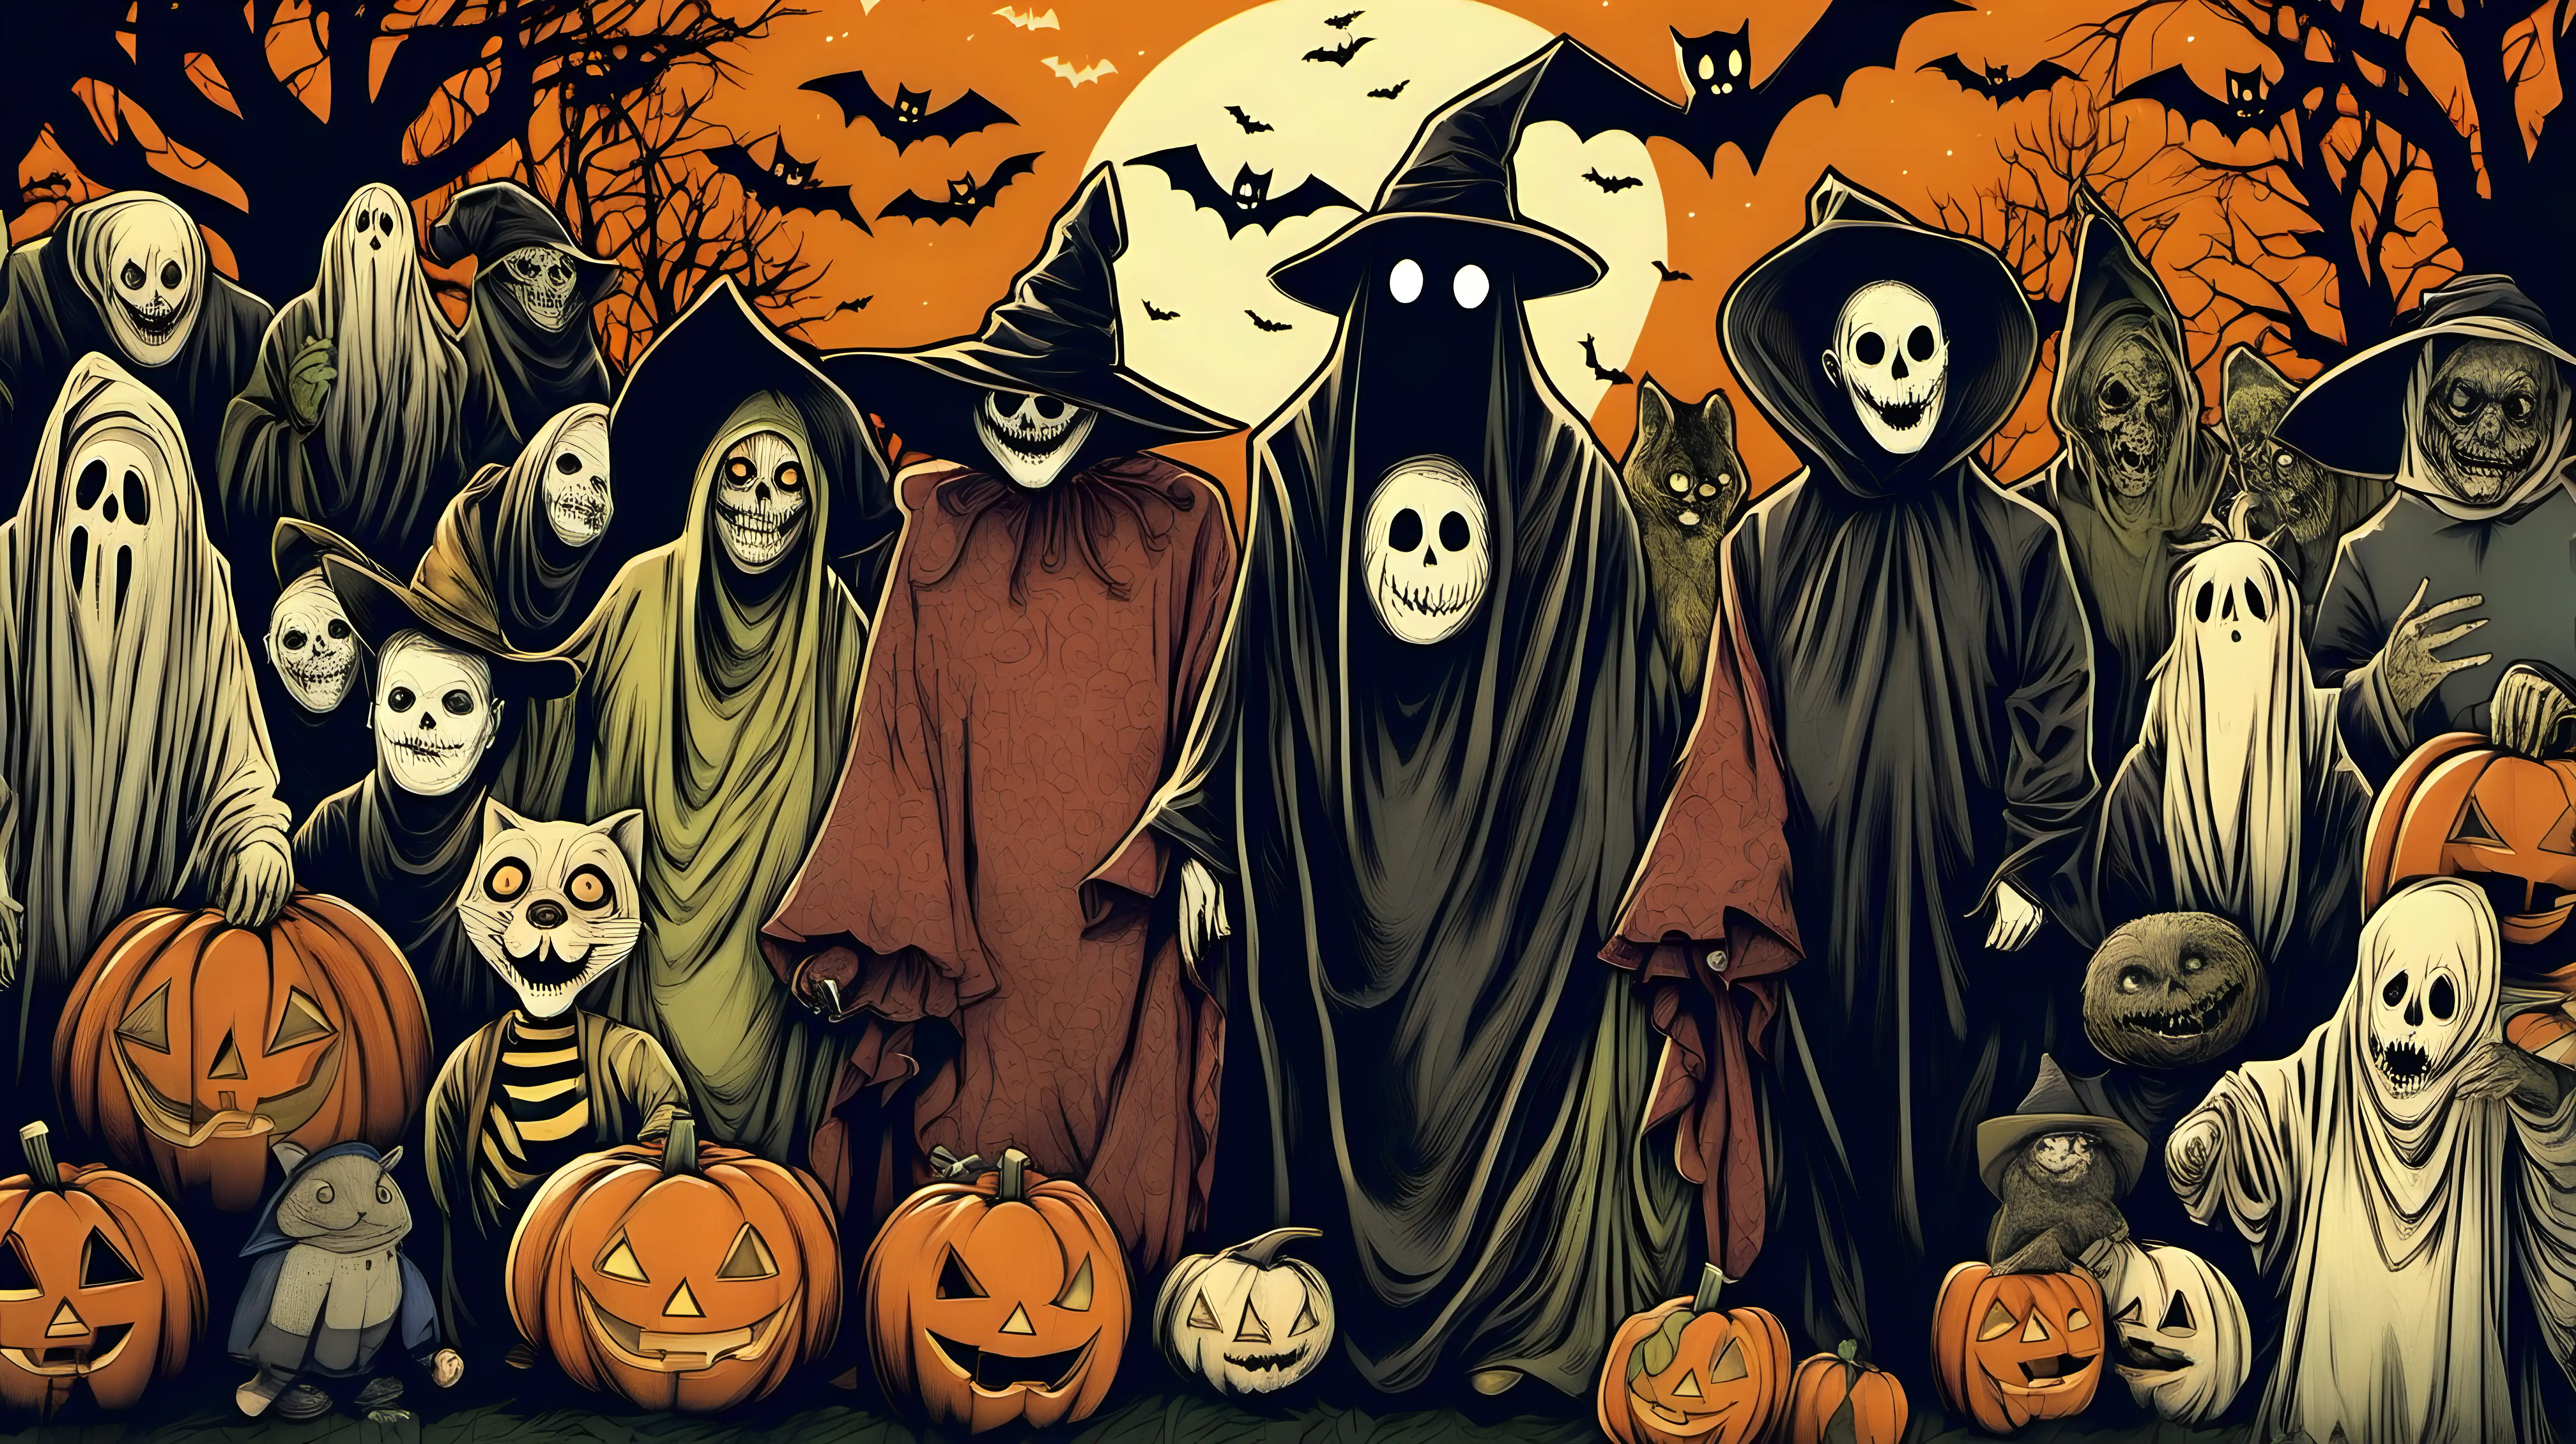 image showing halloween,night,people wearing creepy costumes,horrifying animals